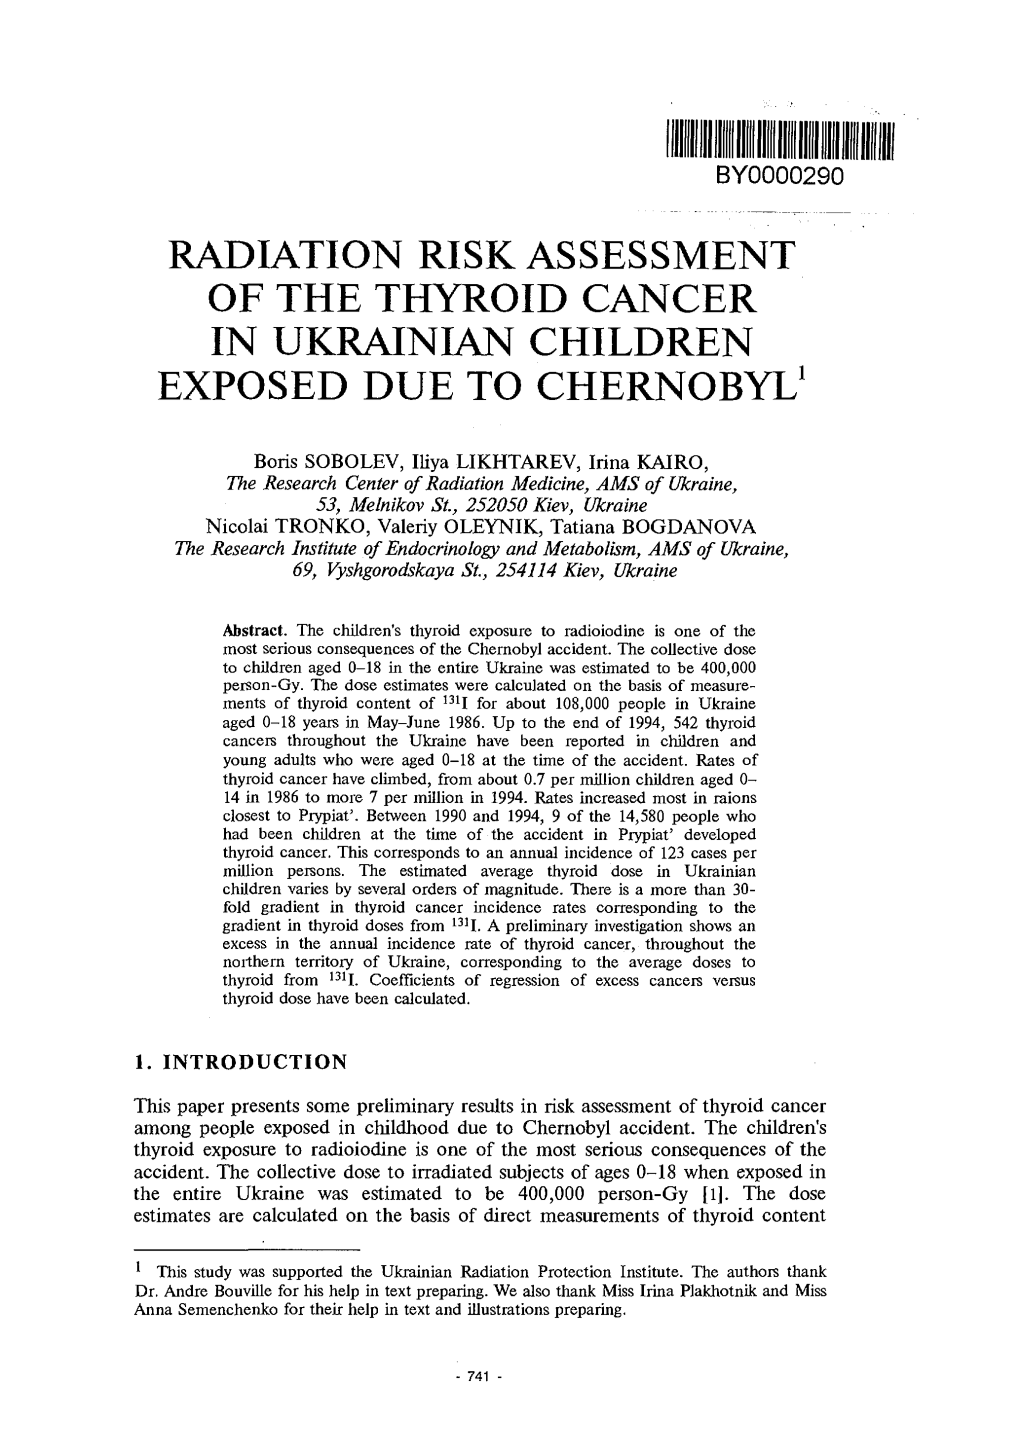 Radiation Risk Assessment of the Thyroid Cancer in Ukrainian Children Exposed Due to Chernobyl1